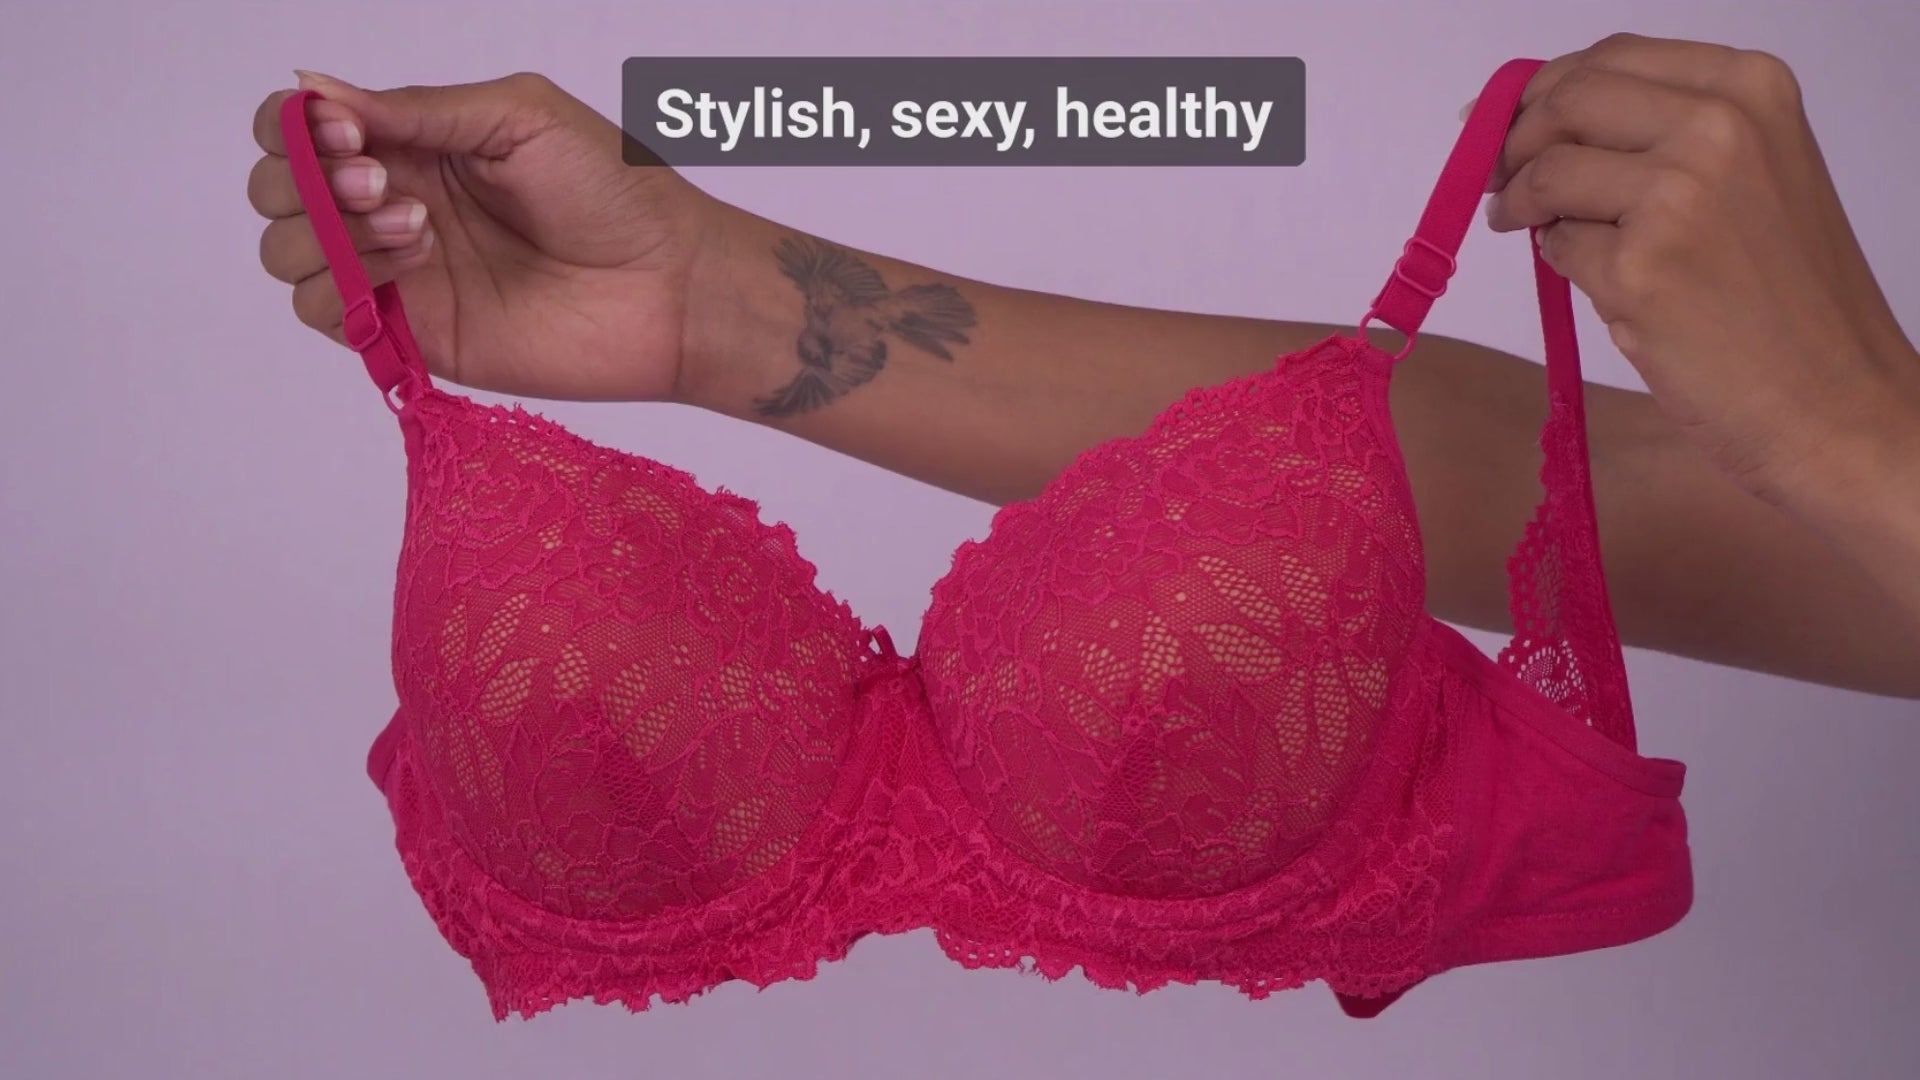 Buy PrettySecrets Sexy Lace Push Up Bra - 40C at